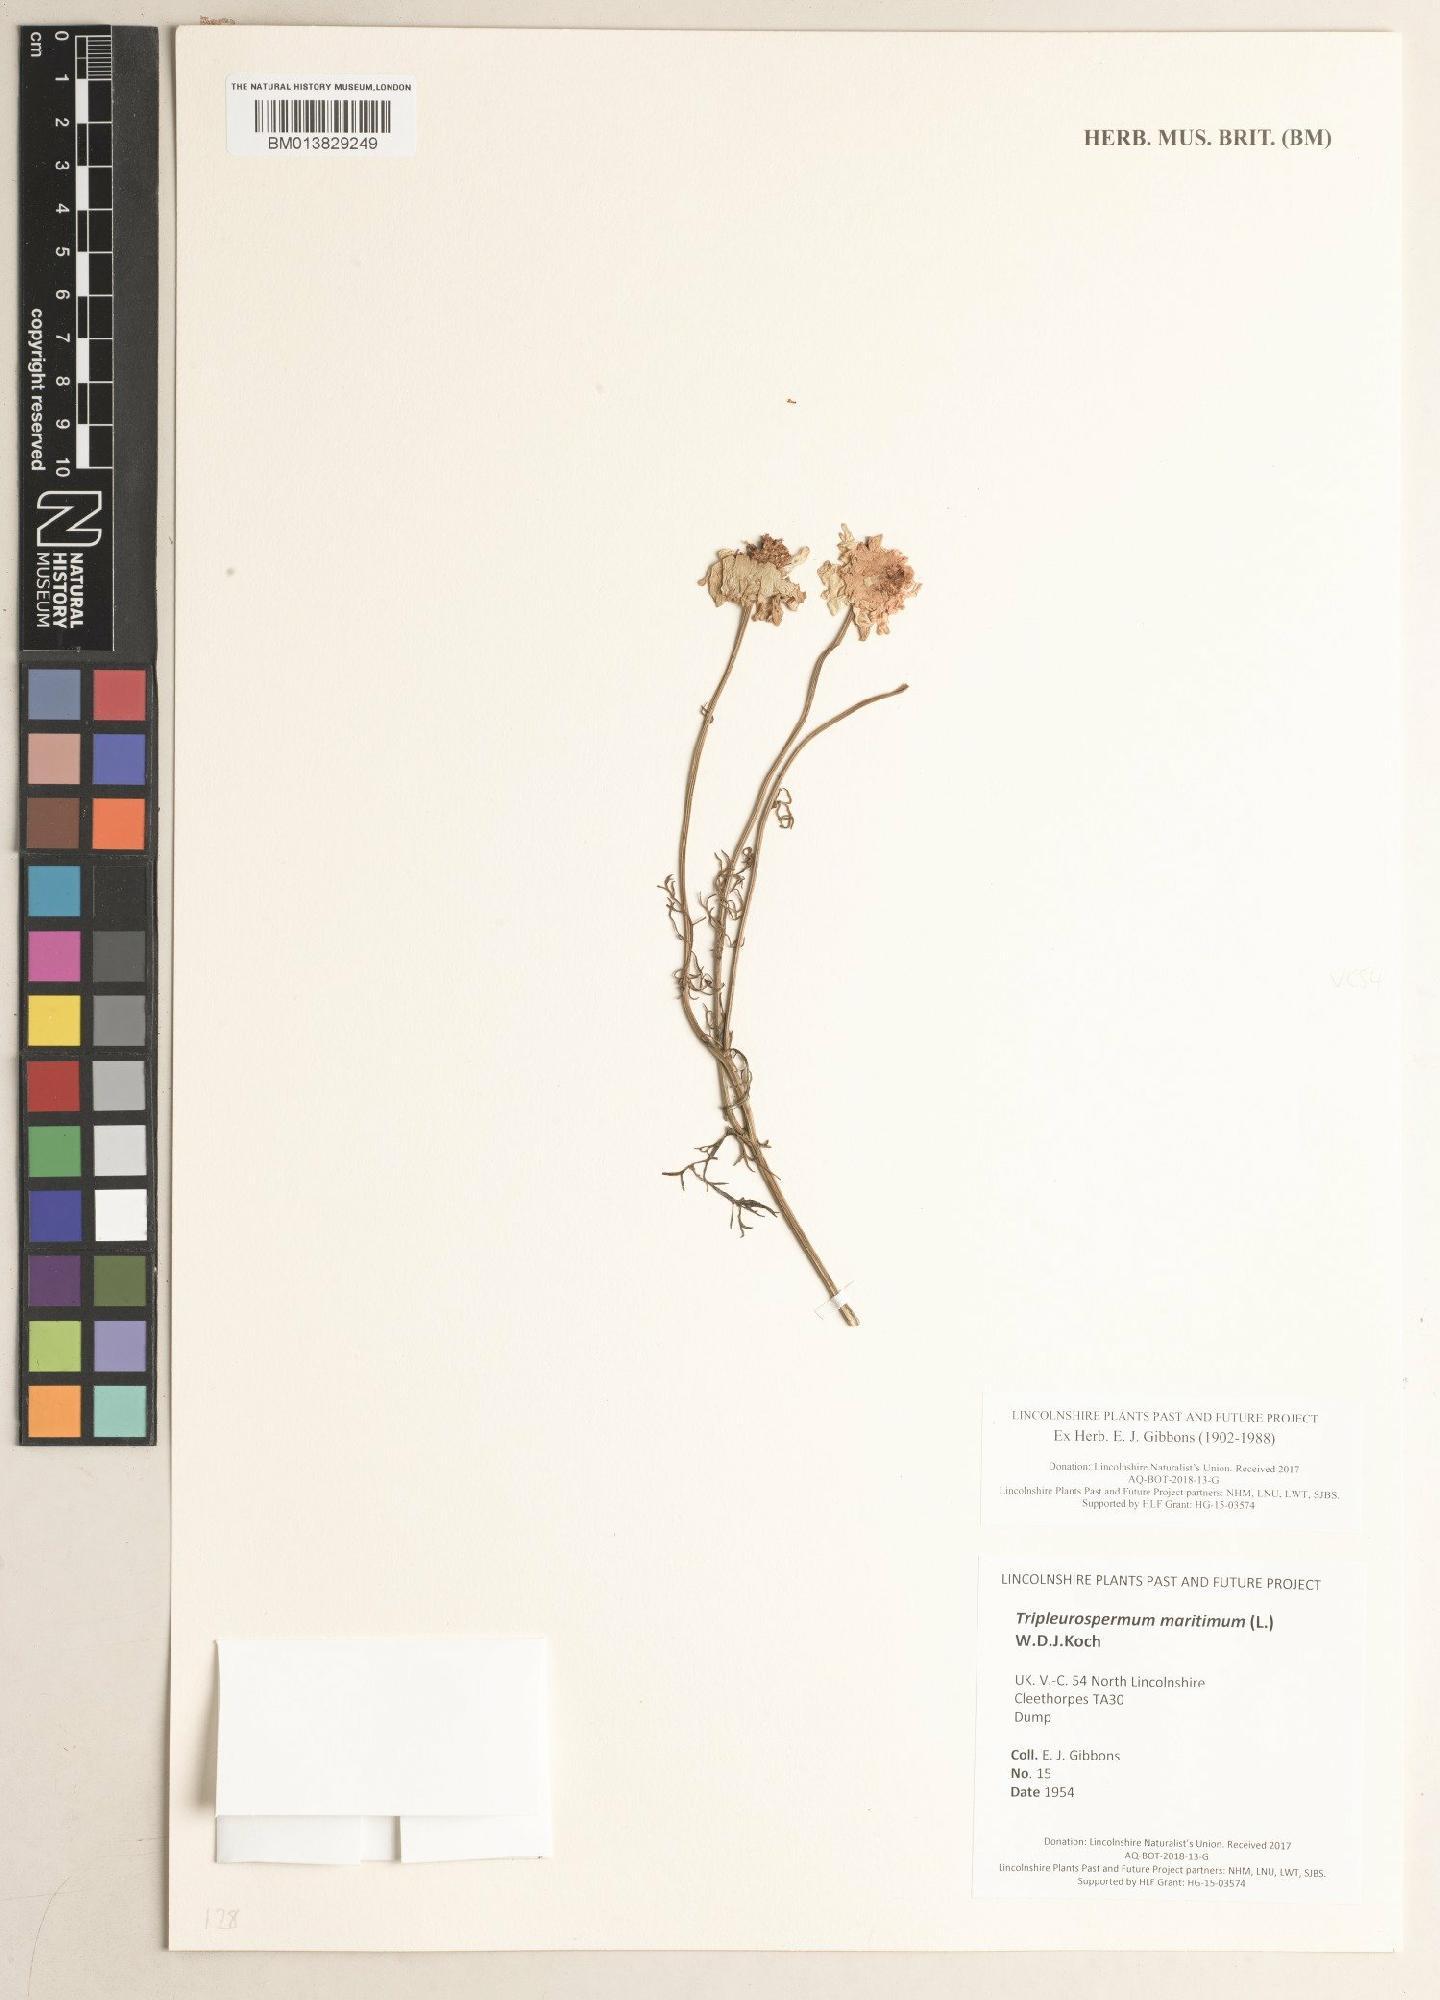 To NHMUK collection (Tripleurospermum maritimum (L.) W.D.J.Koch; NHMUK:ecatalogue:9474942)